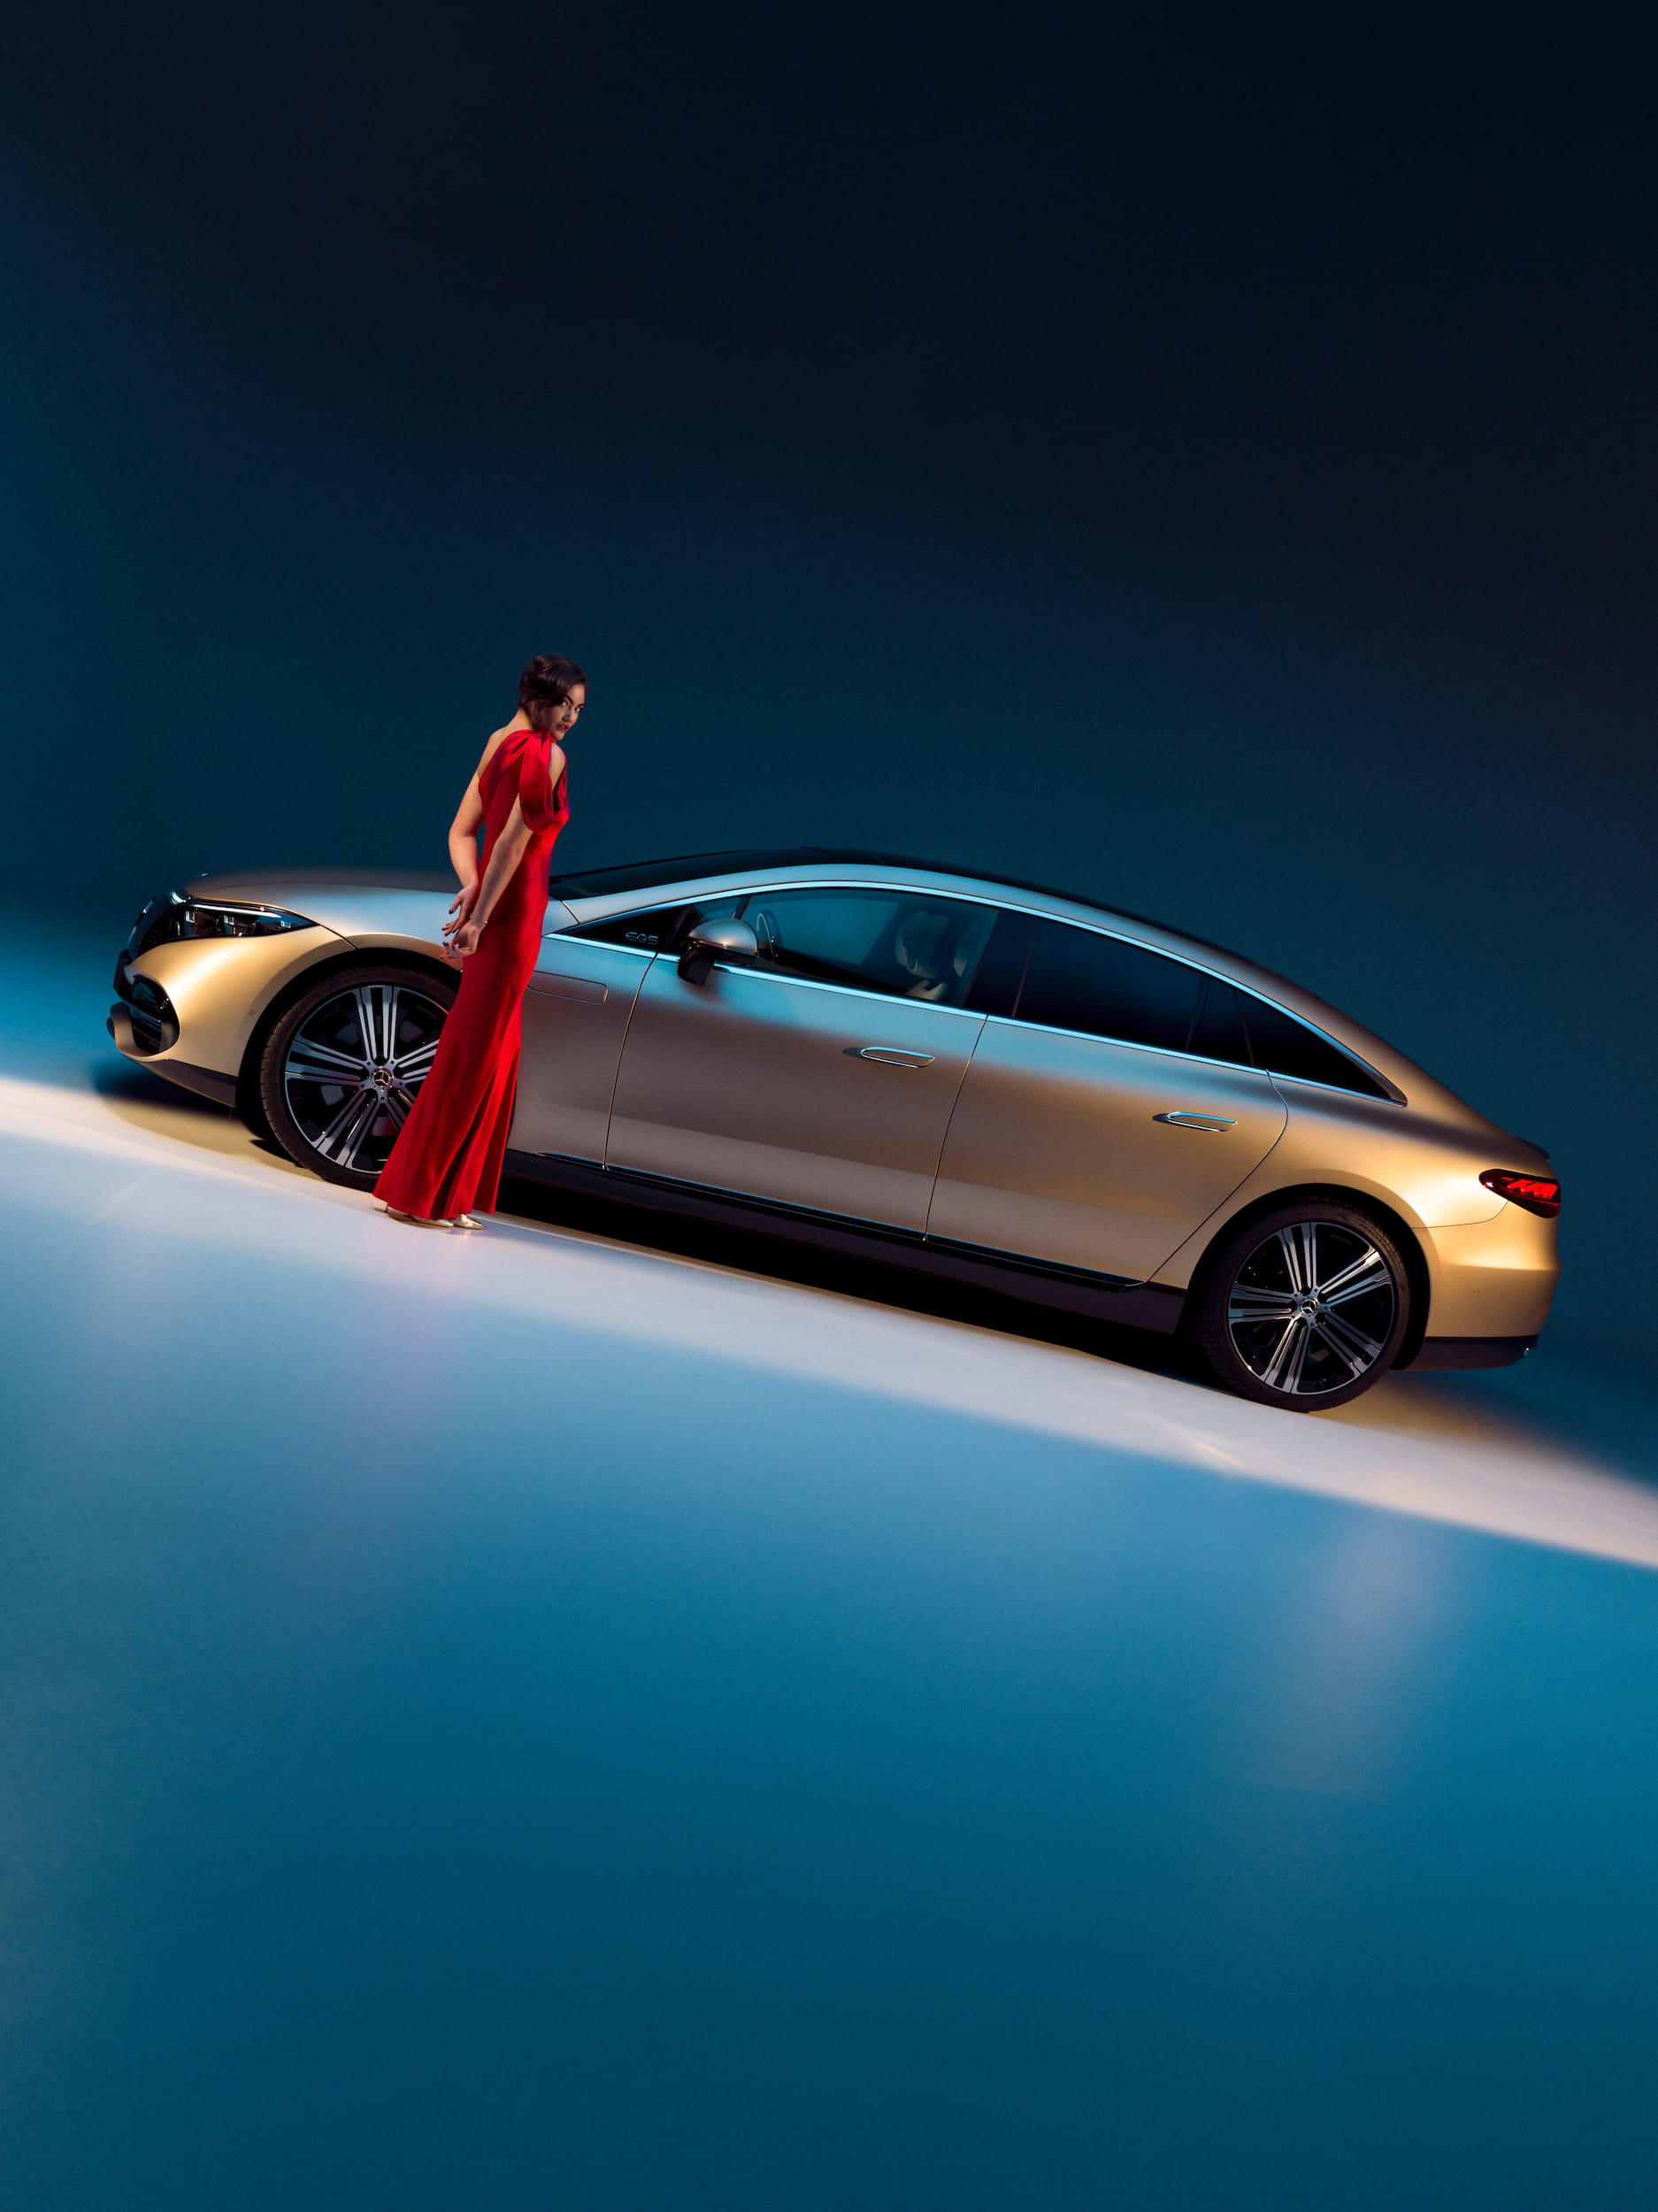 20221216 – Mercedes-Benz- MBcreator – Yannick Wolff x InMotion Studio – 01_0002-2